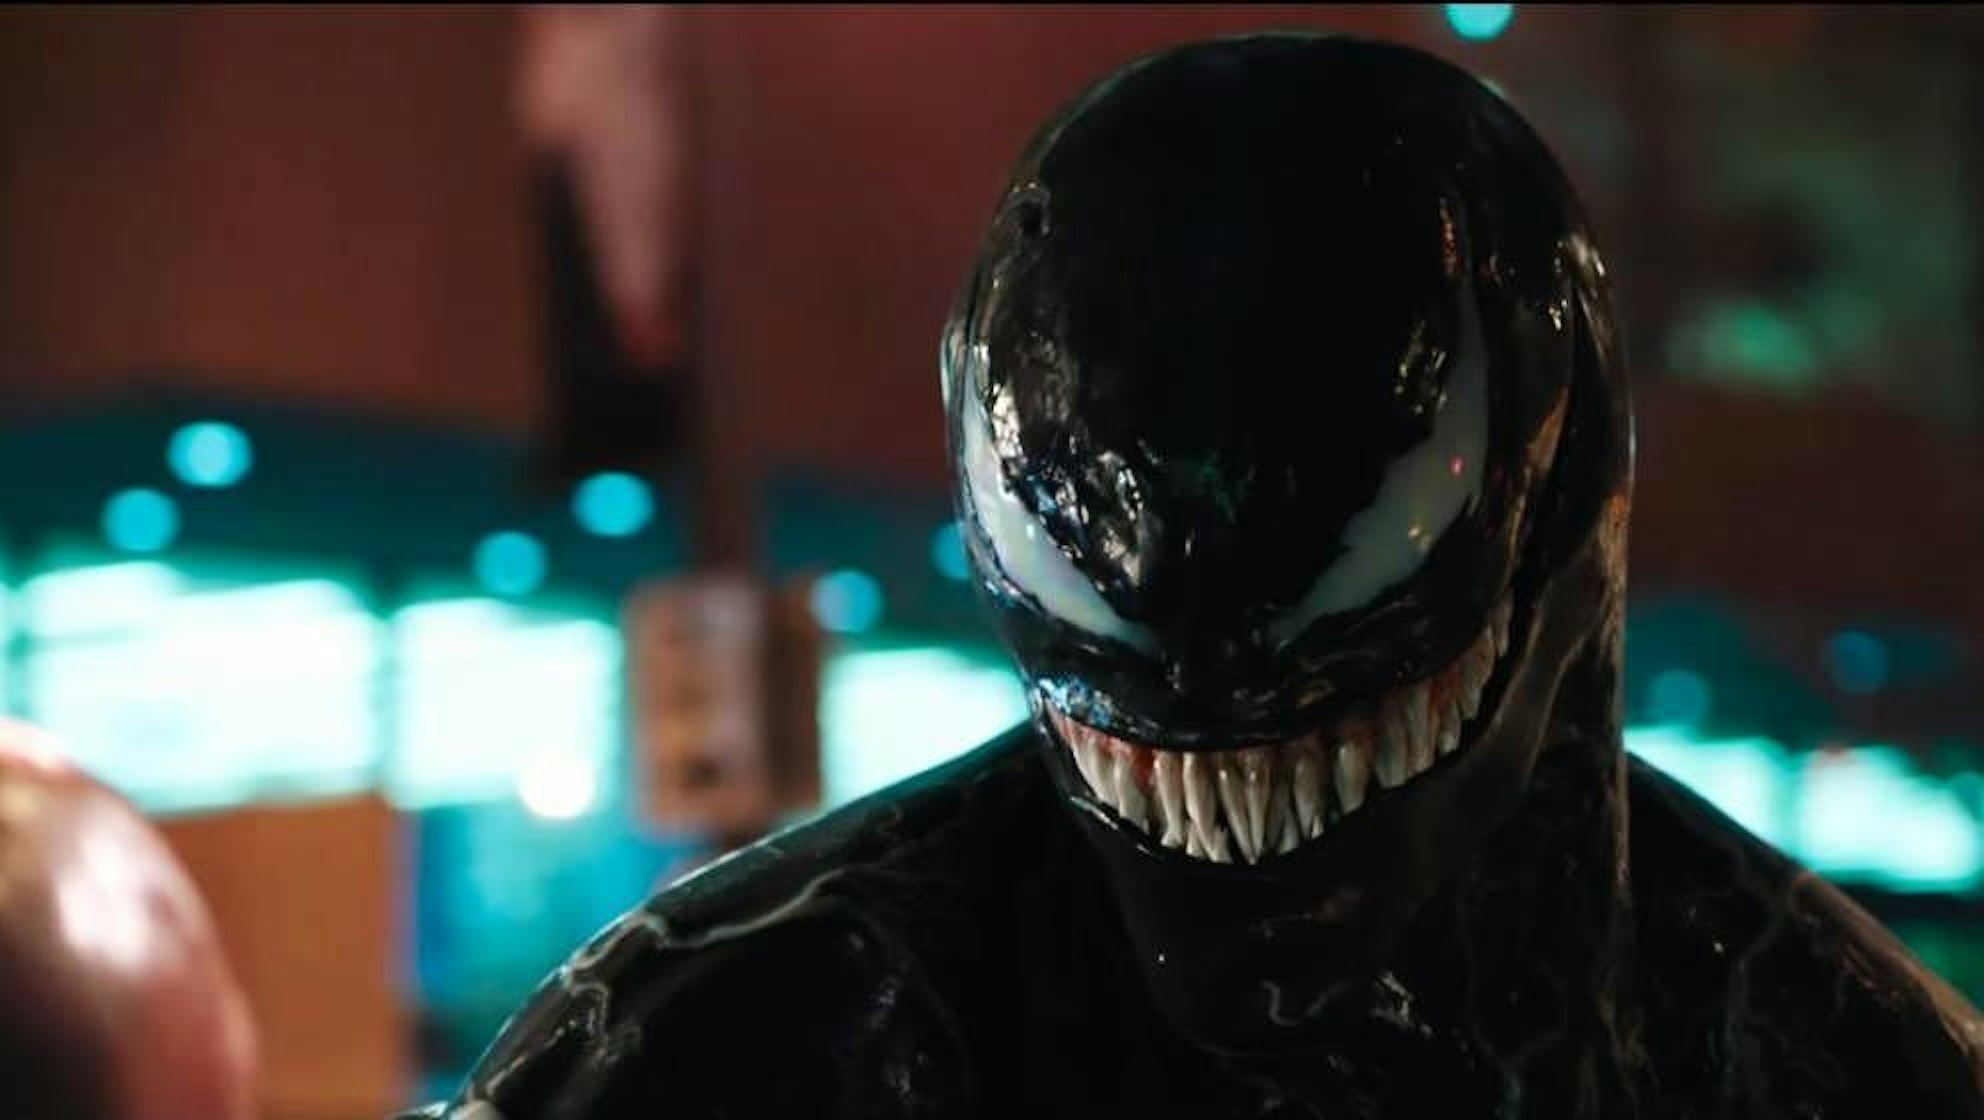 Film Review Venom is a Perfunctory Franchise Film